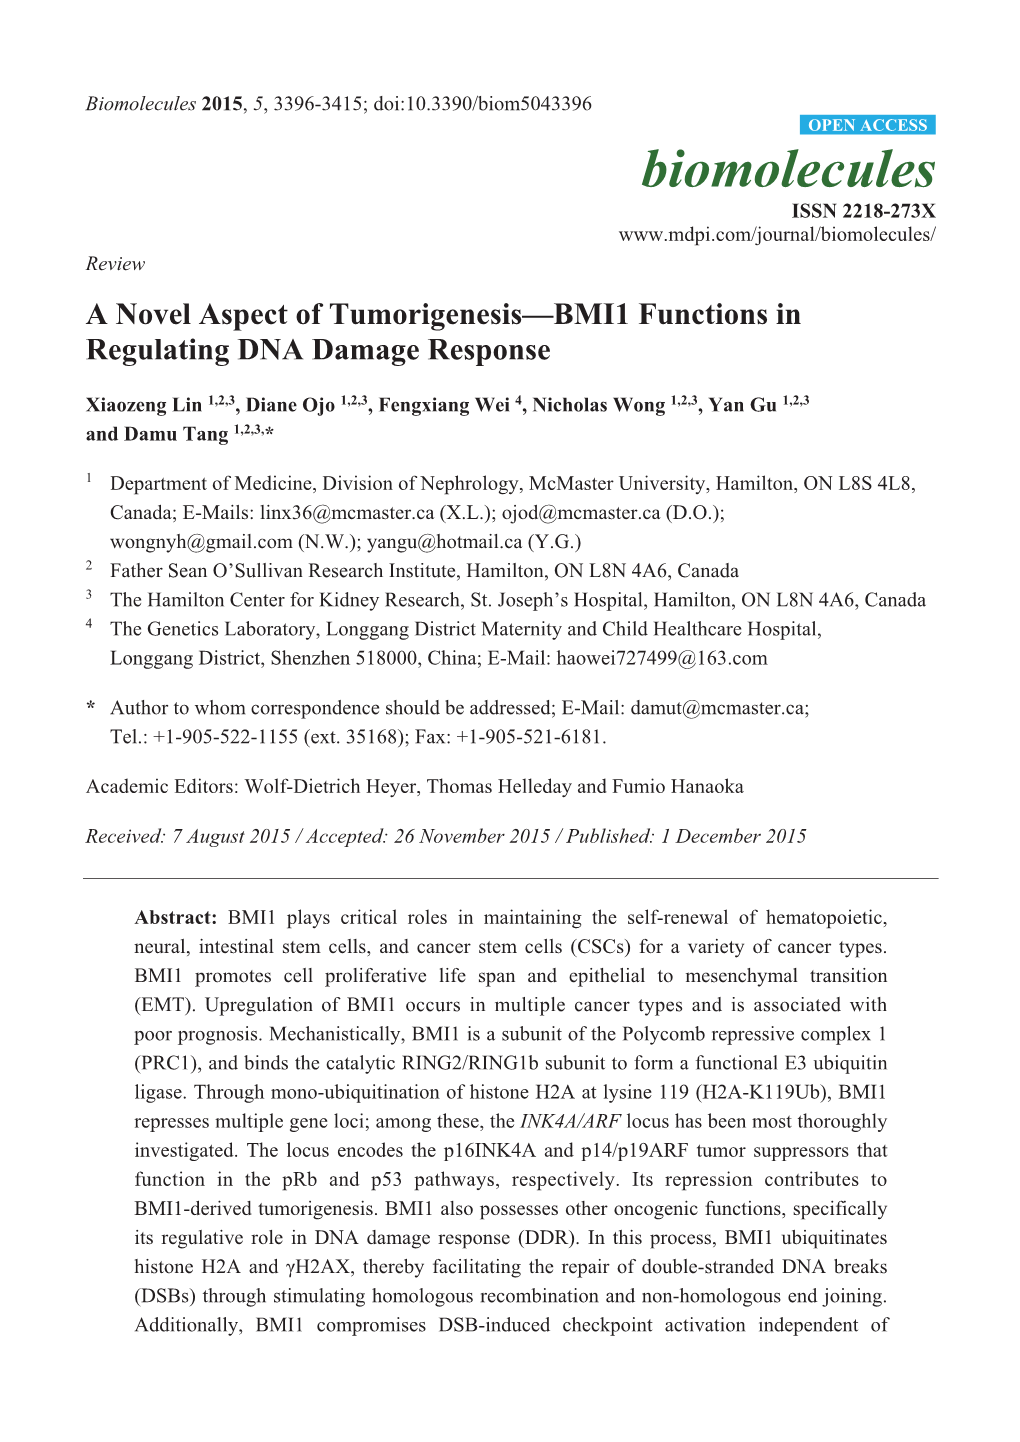 A Novel Aspect of Tumorigenesis—BMI1 Functions in Regulating DNA Damage Response